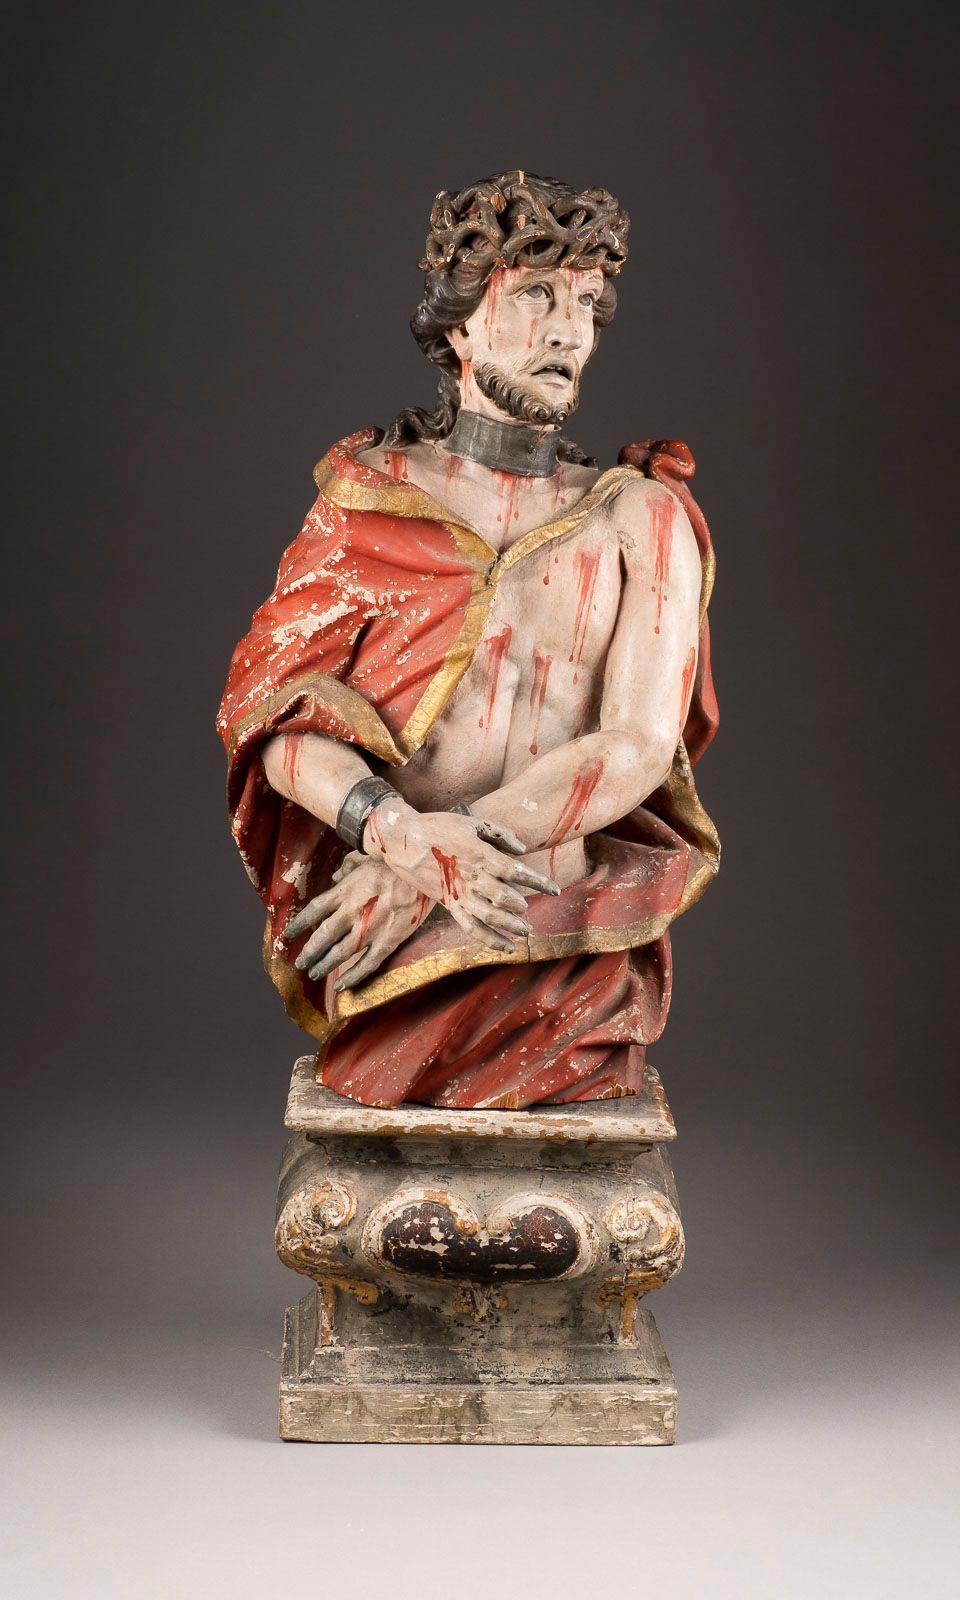 Null CHRIST AS A PAINFUL MAN ON A SOCKEL South German, 17th century Wood, plasti&hellip;